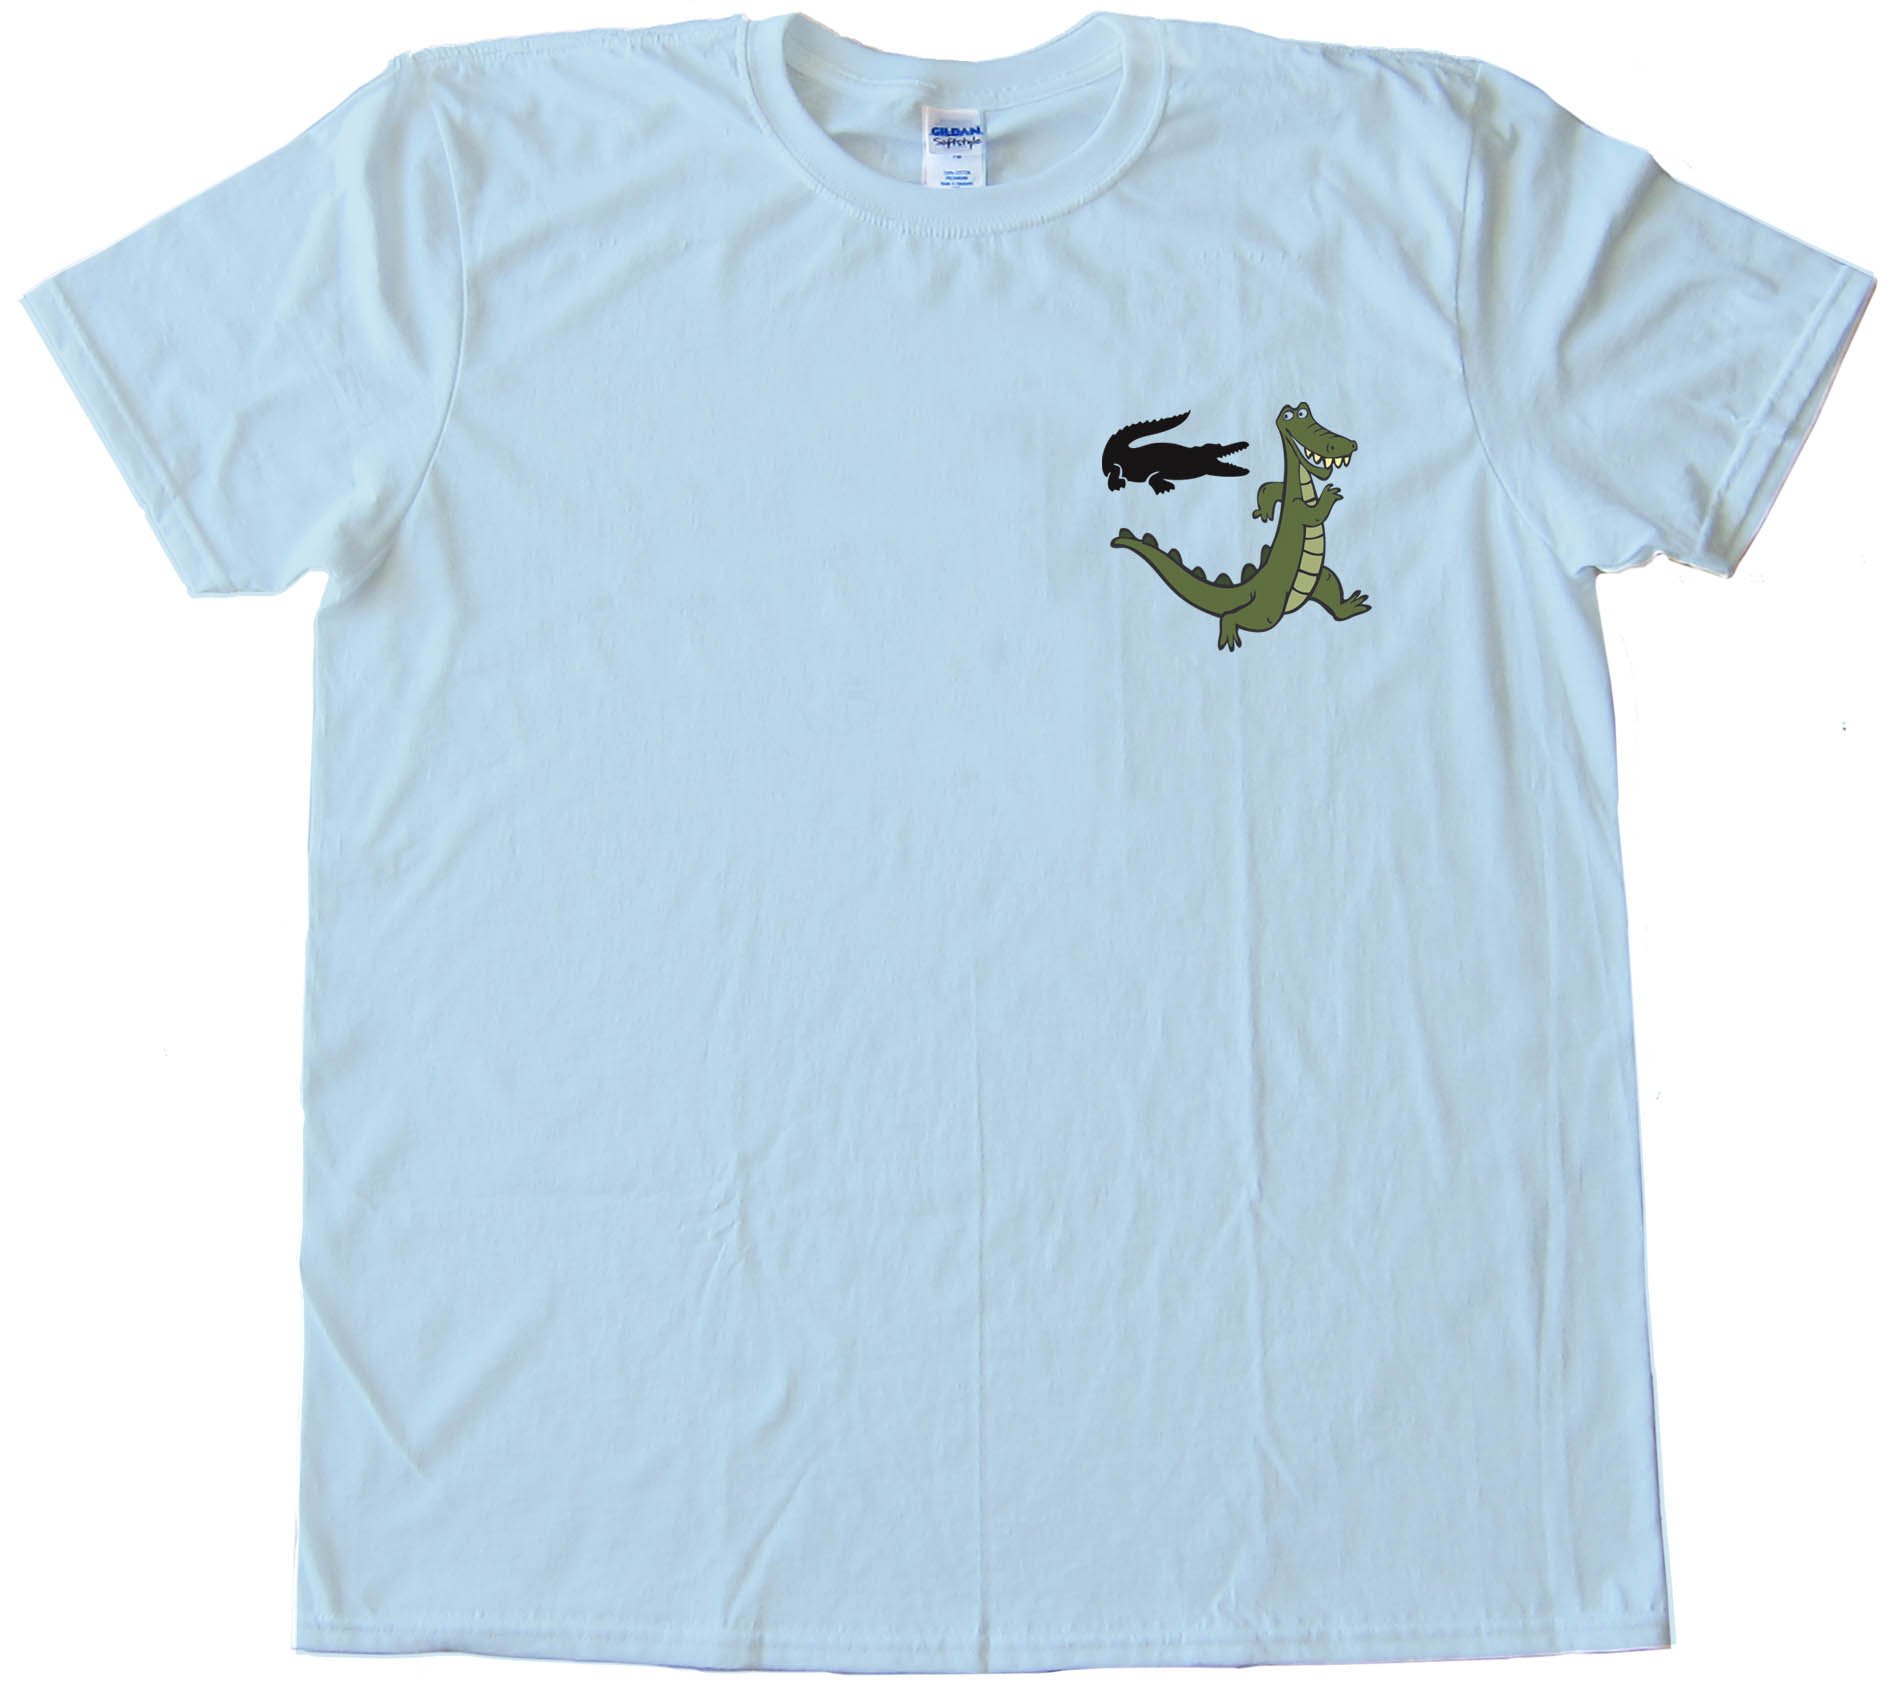 Izod Lacoste Alligator Runaway - Tee Shirt